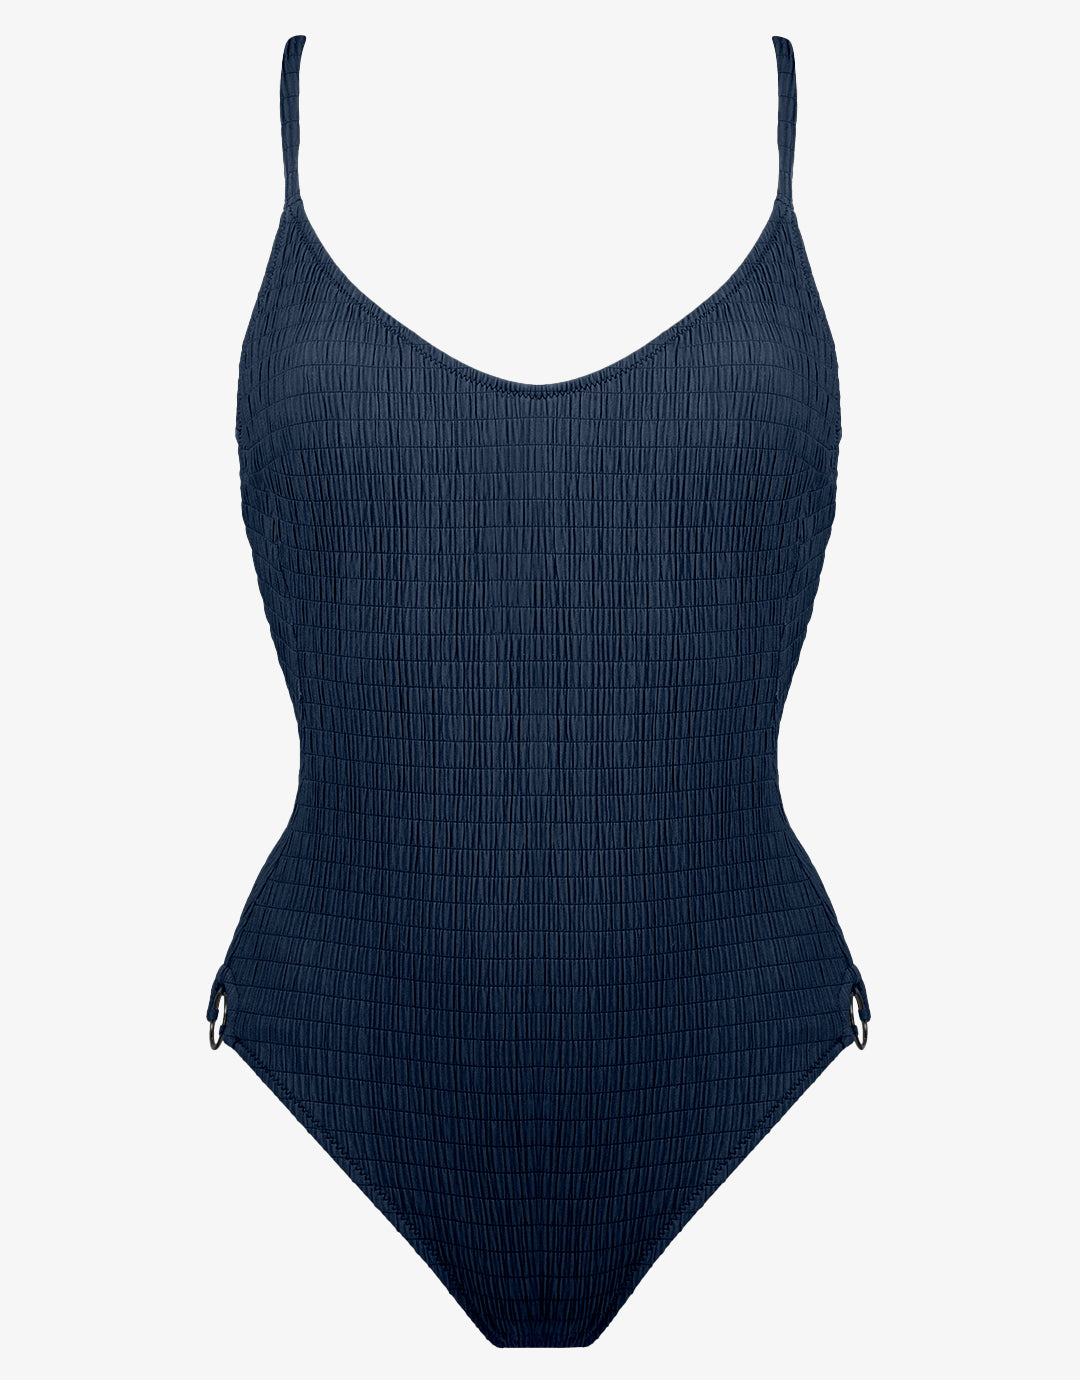 Solid Crush Swimsuit - Night Blue - Simply Beach UK